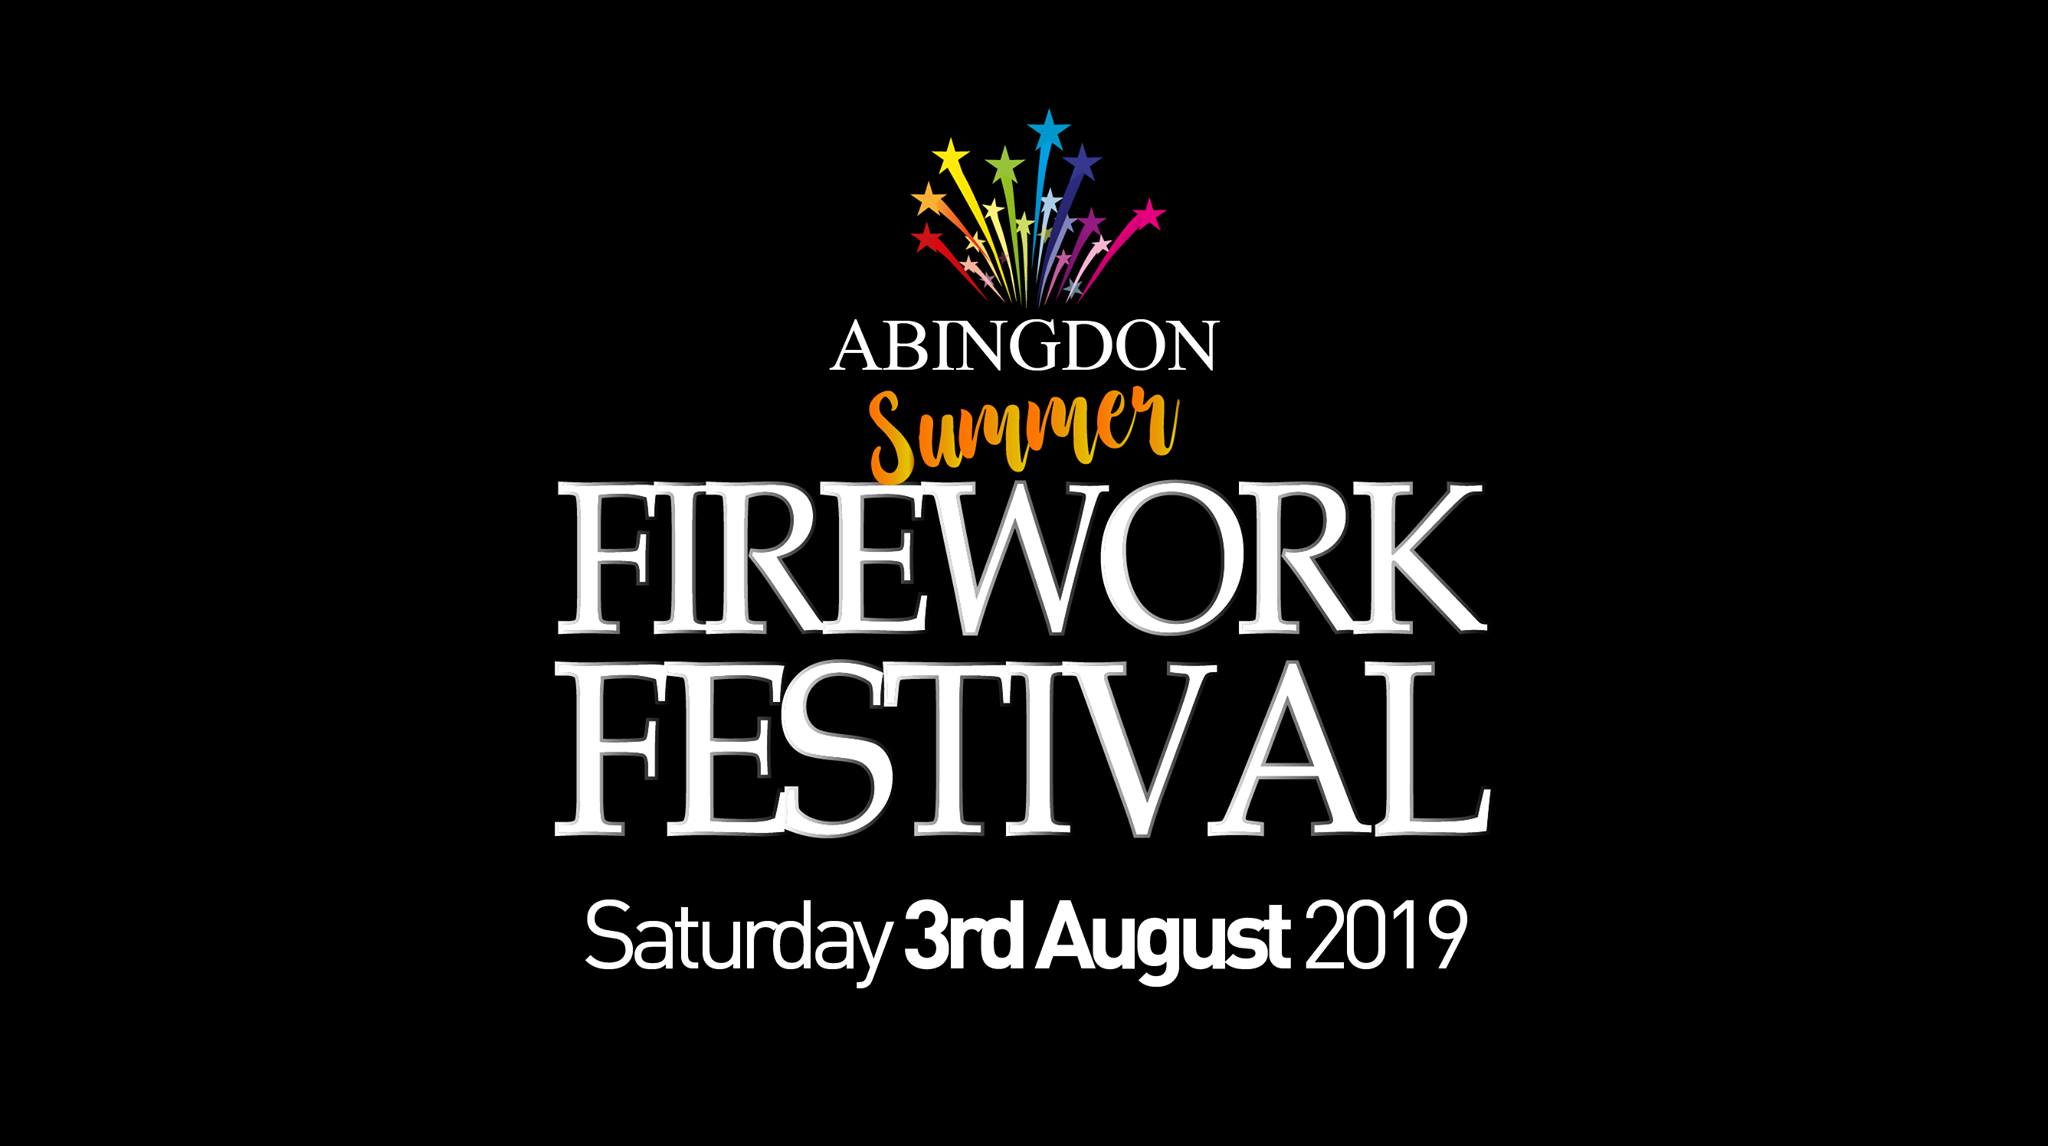 Abingdon Summer Firework Festival Red Kite Days